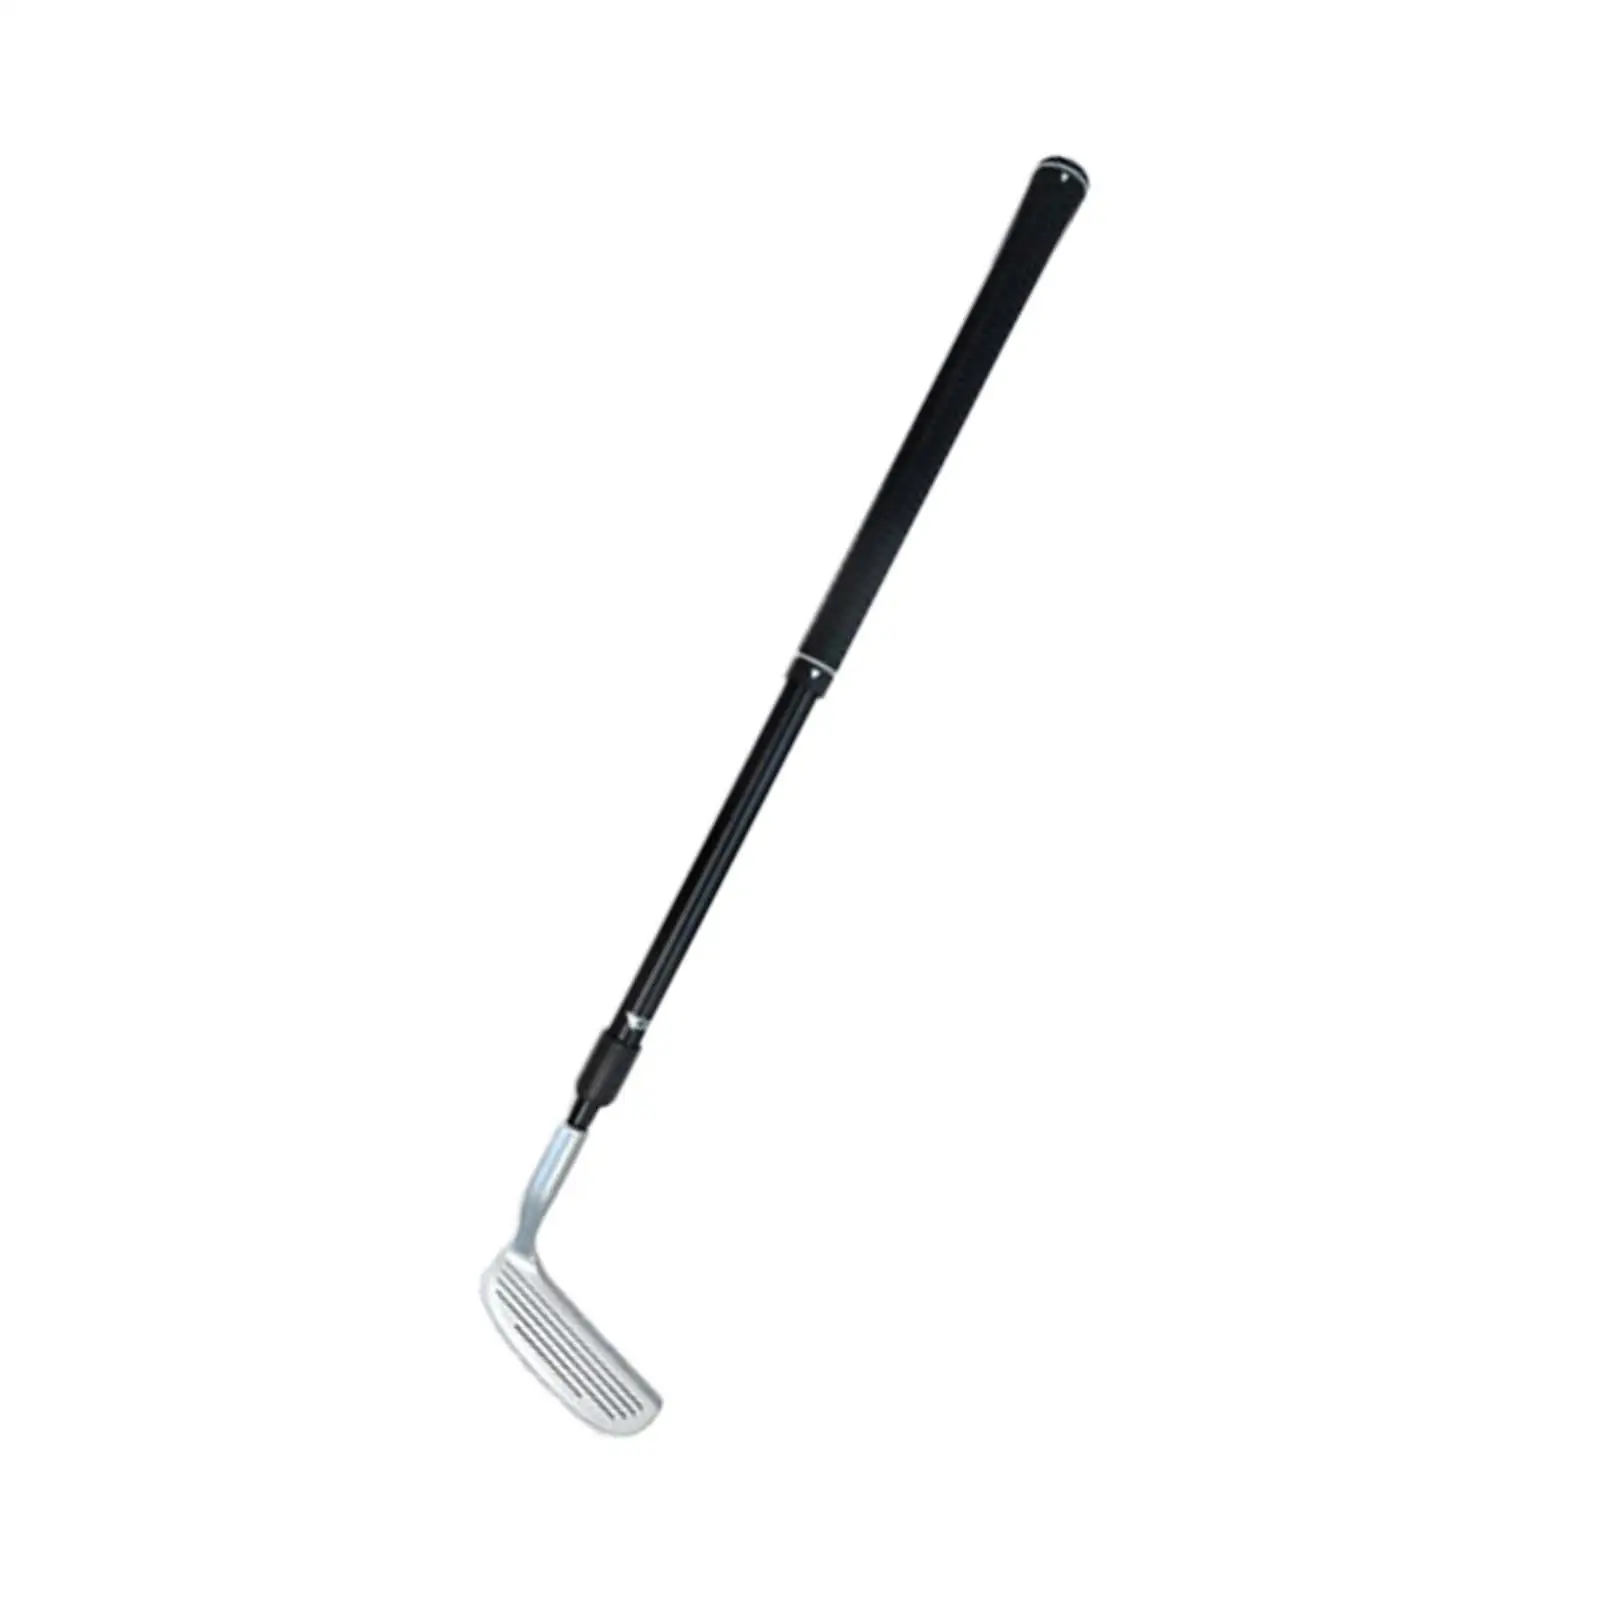 Golf Putters Retractable Junior Putter Anti Slip Sturdy Lightweight Versatile Flexible 0.5kg Weight Rubber Grip for Travel